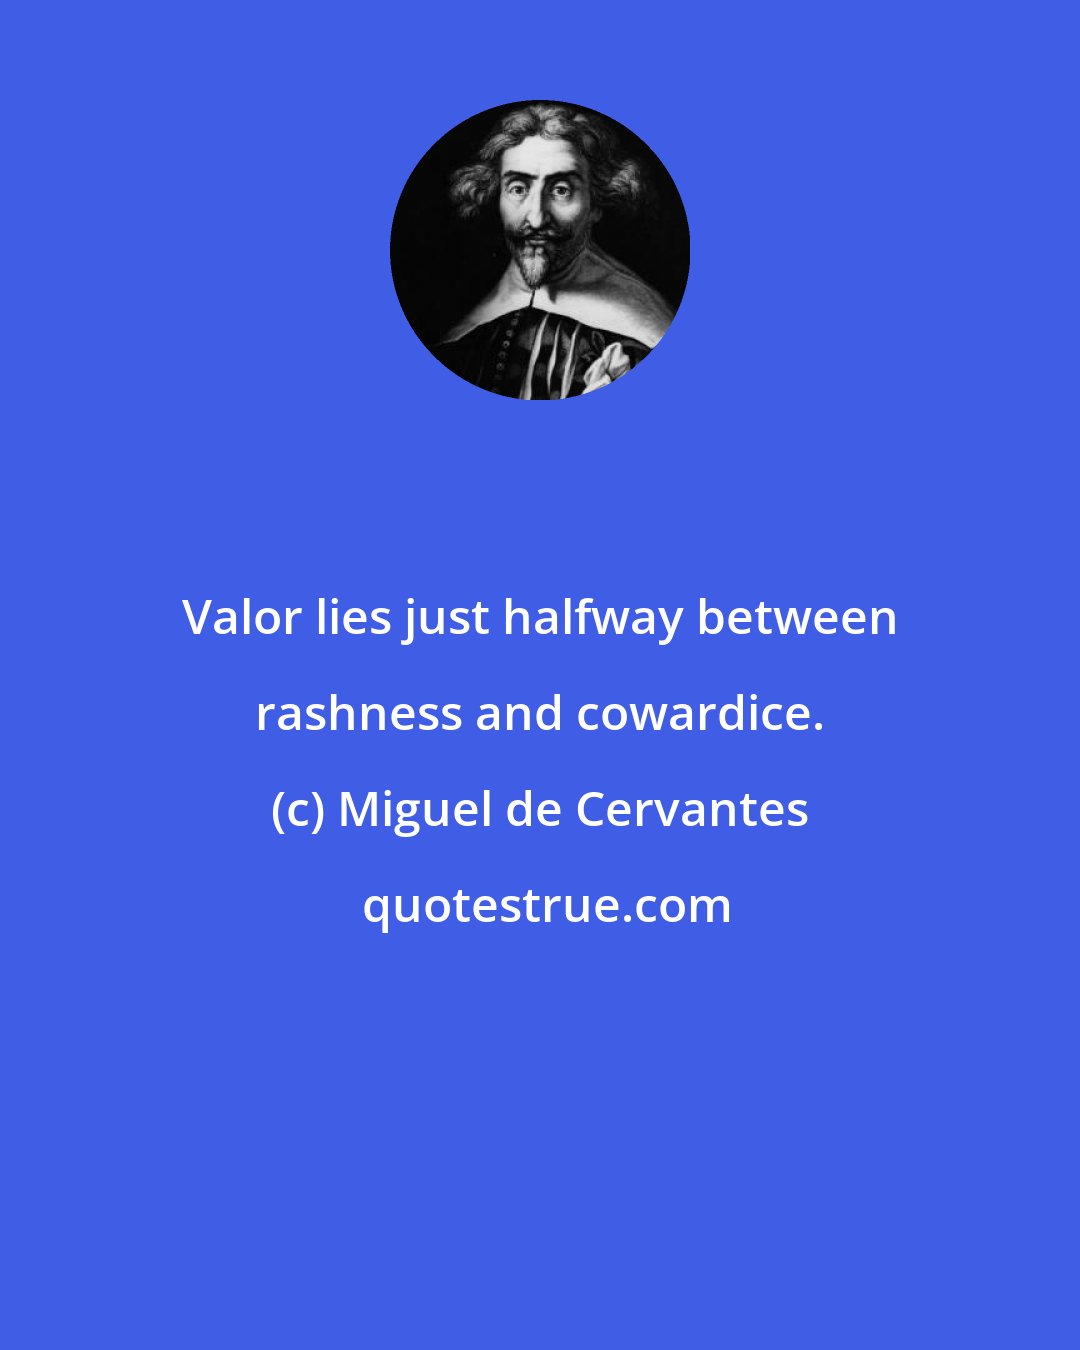 Miguel de Cervantes: Valor lies just halfway between rashness and cowardice.